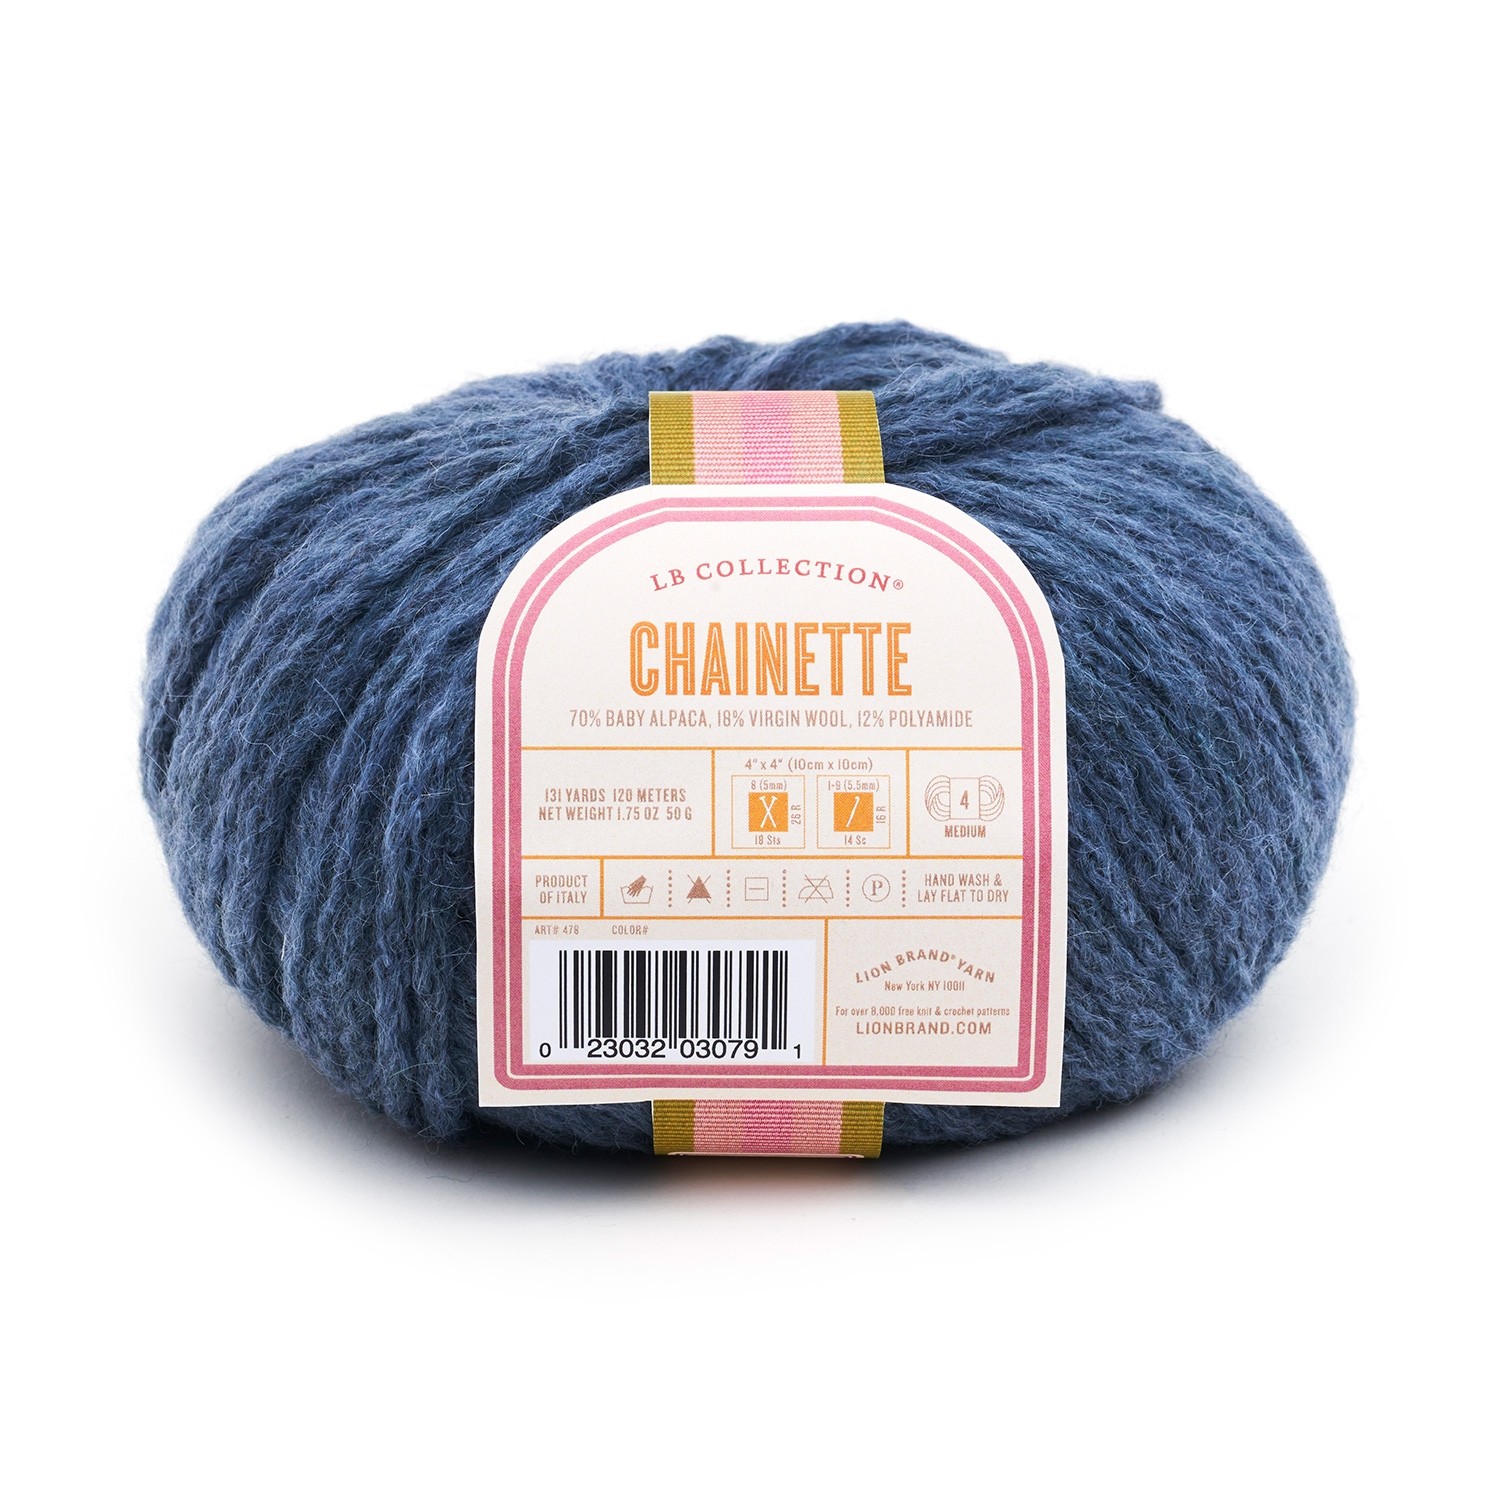 Chainette: A Lofty New Luxury Yarn | Lion Brand Notebook